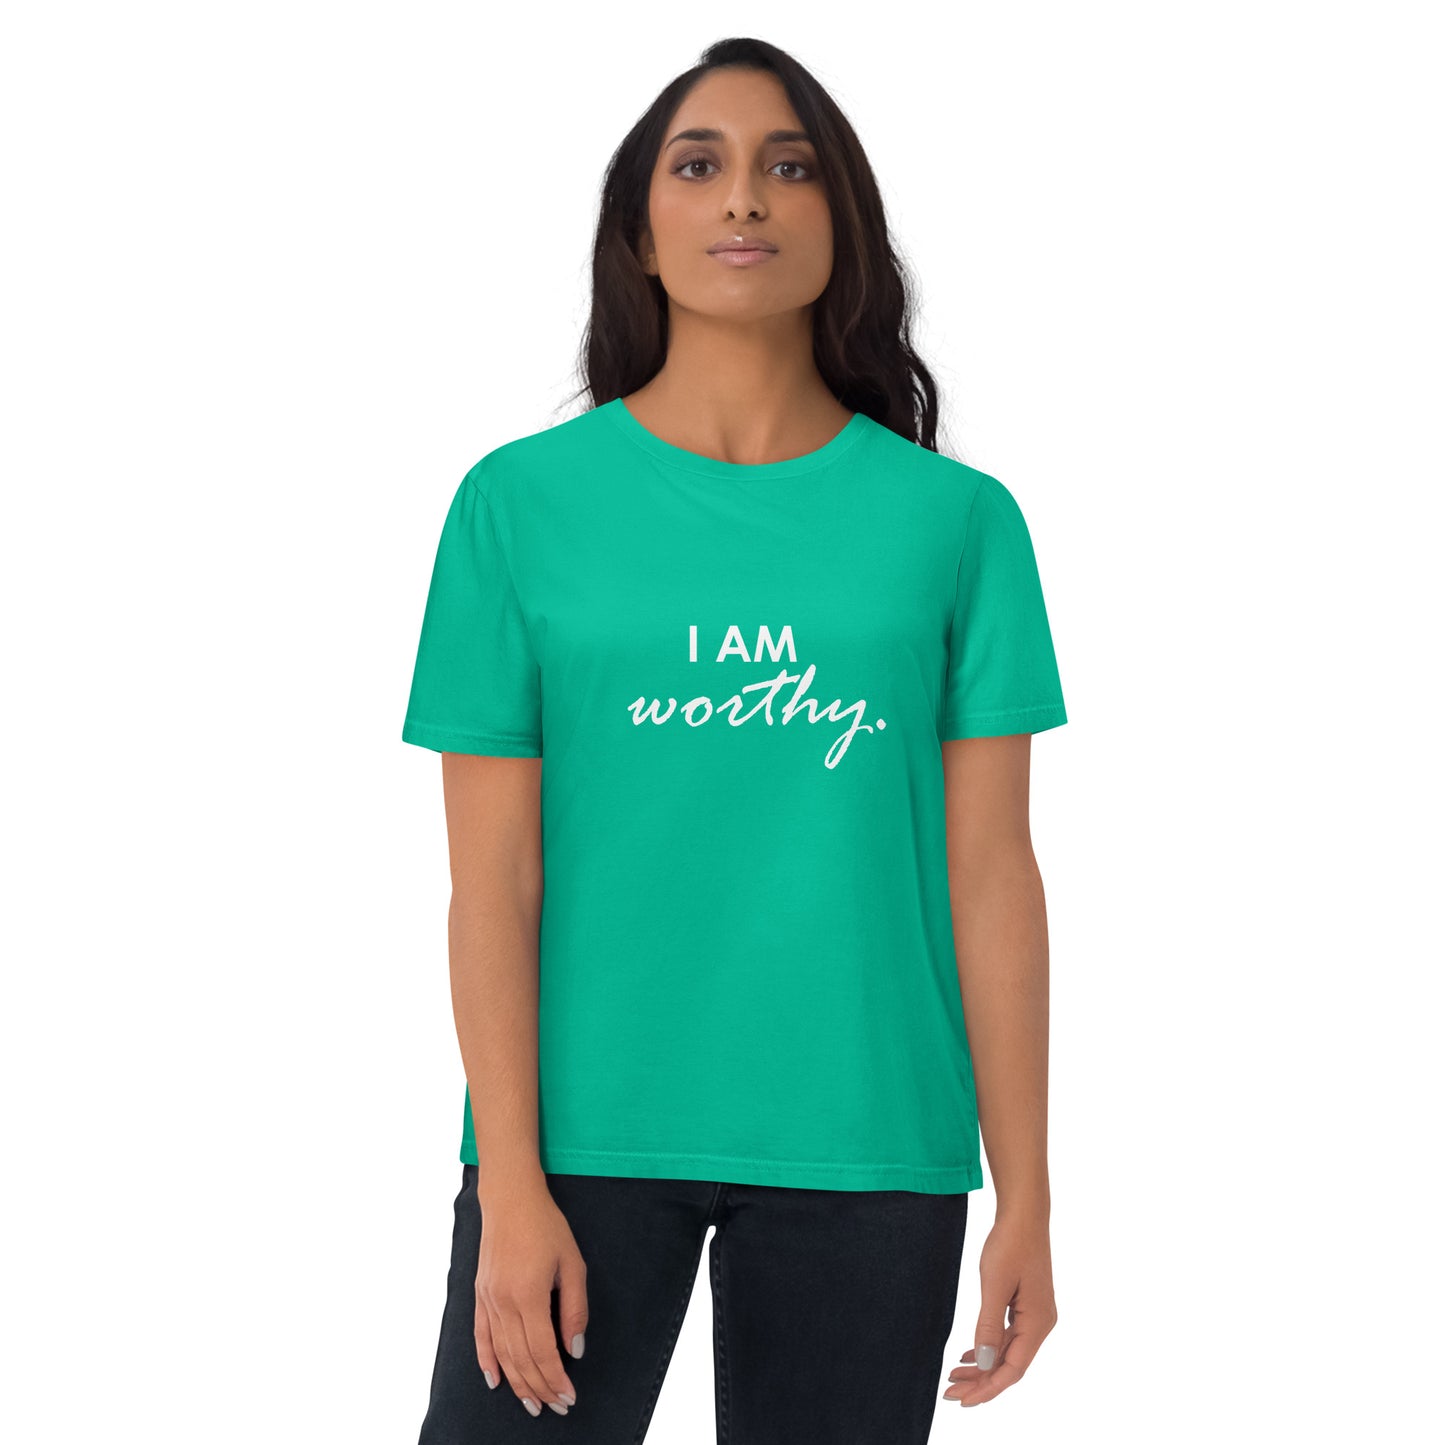 I AM WORTHY - Unisex organic cotton t-shirt